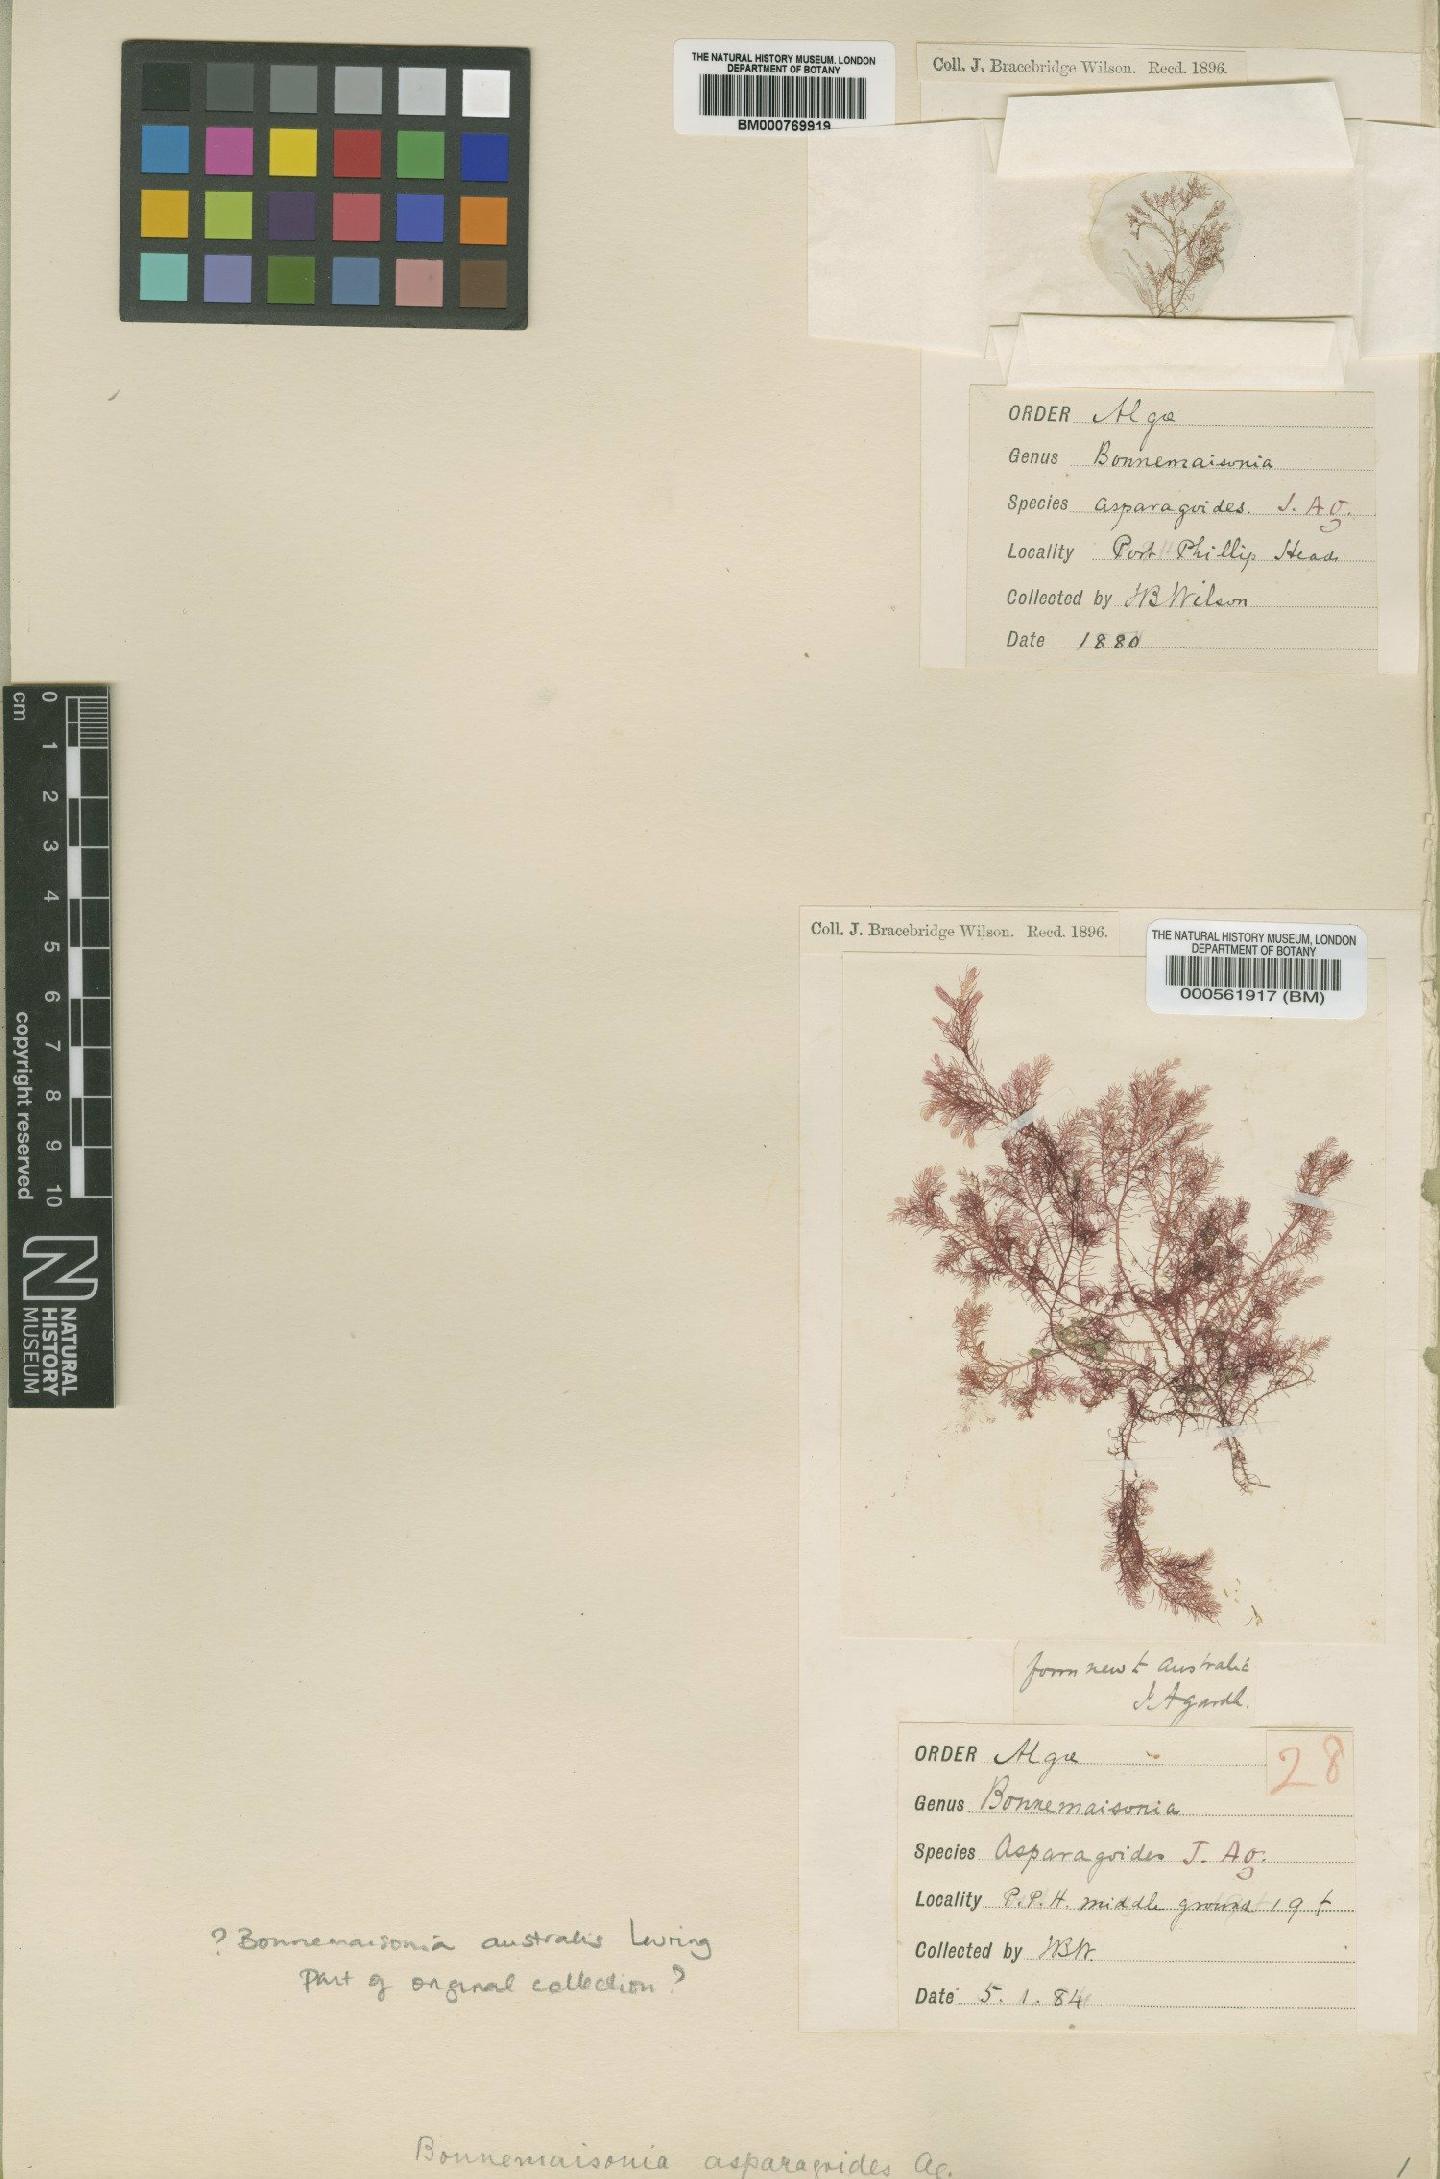 To NHMUK collection (Bonnemaisonia australis Levring; Type; NHMUK:ecatalogue:532725)